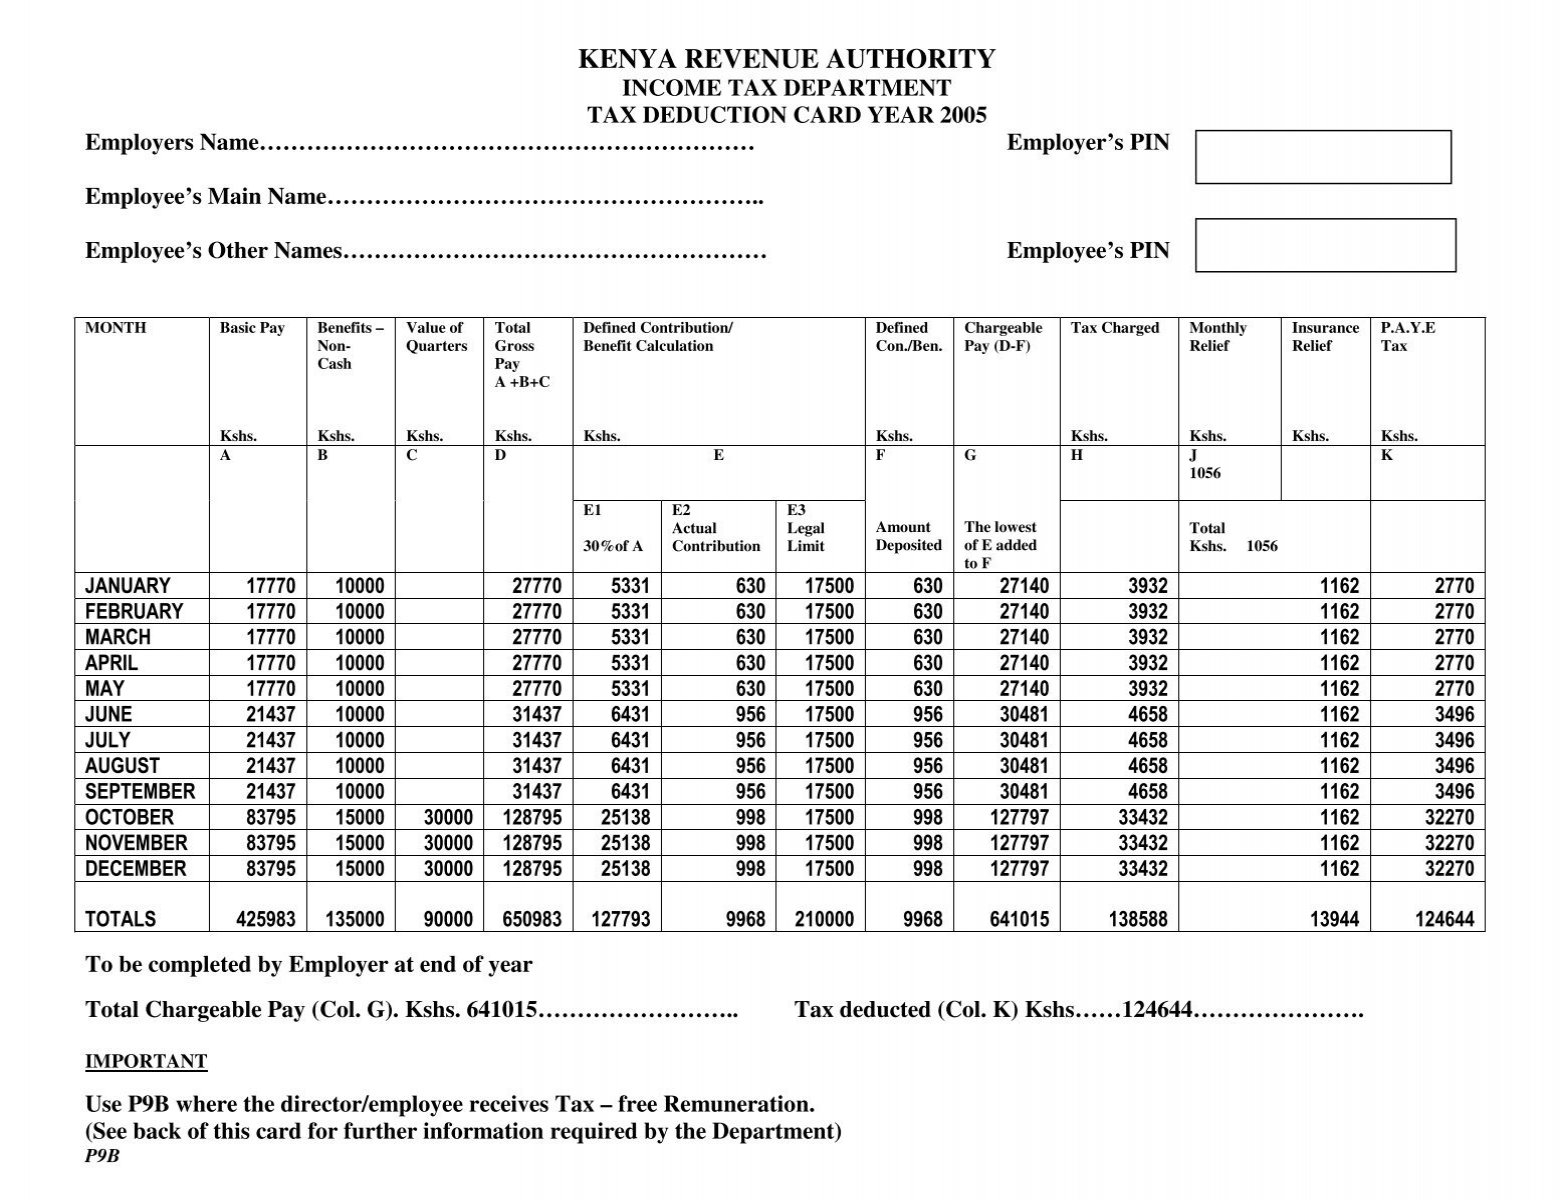 tax-deduction-card-kenya-revenue-authority